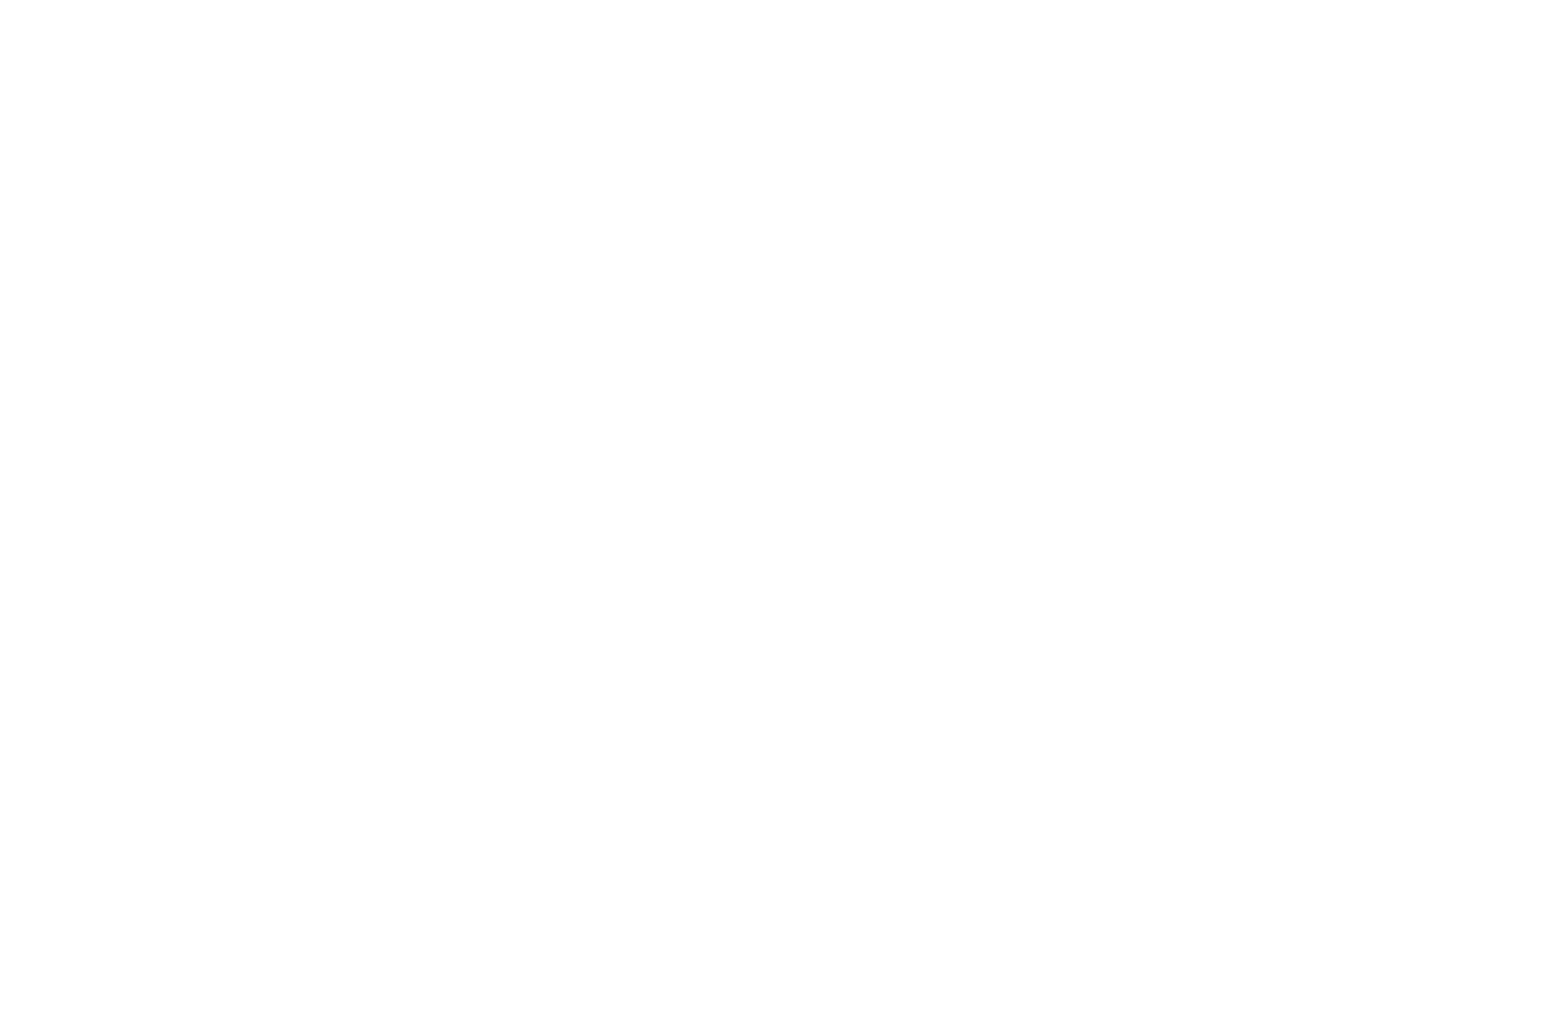 Warehouses De Pauw logo for dark backgrounds (transparent PNG)